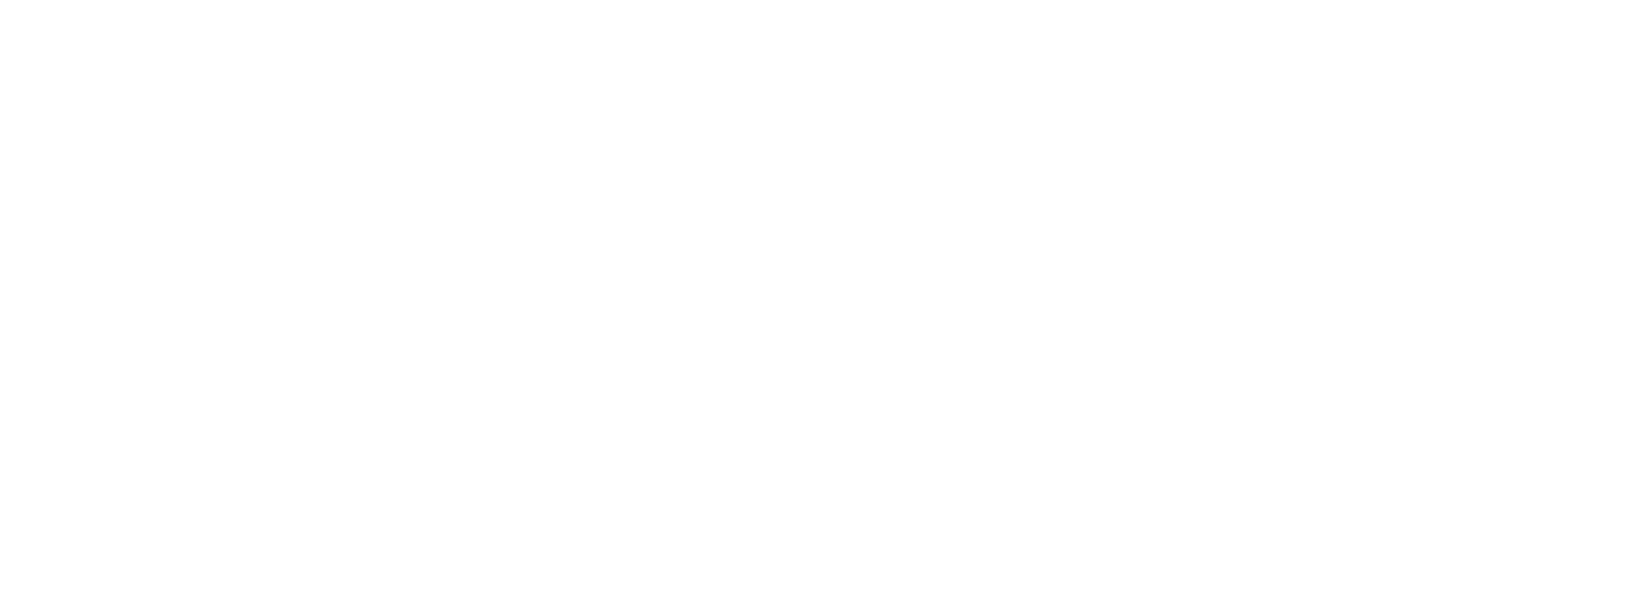 White Orbit logo